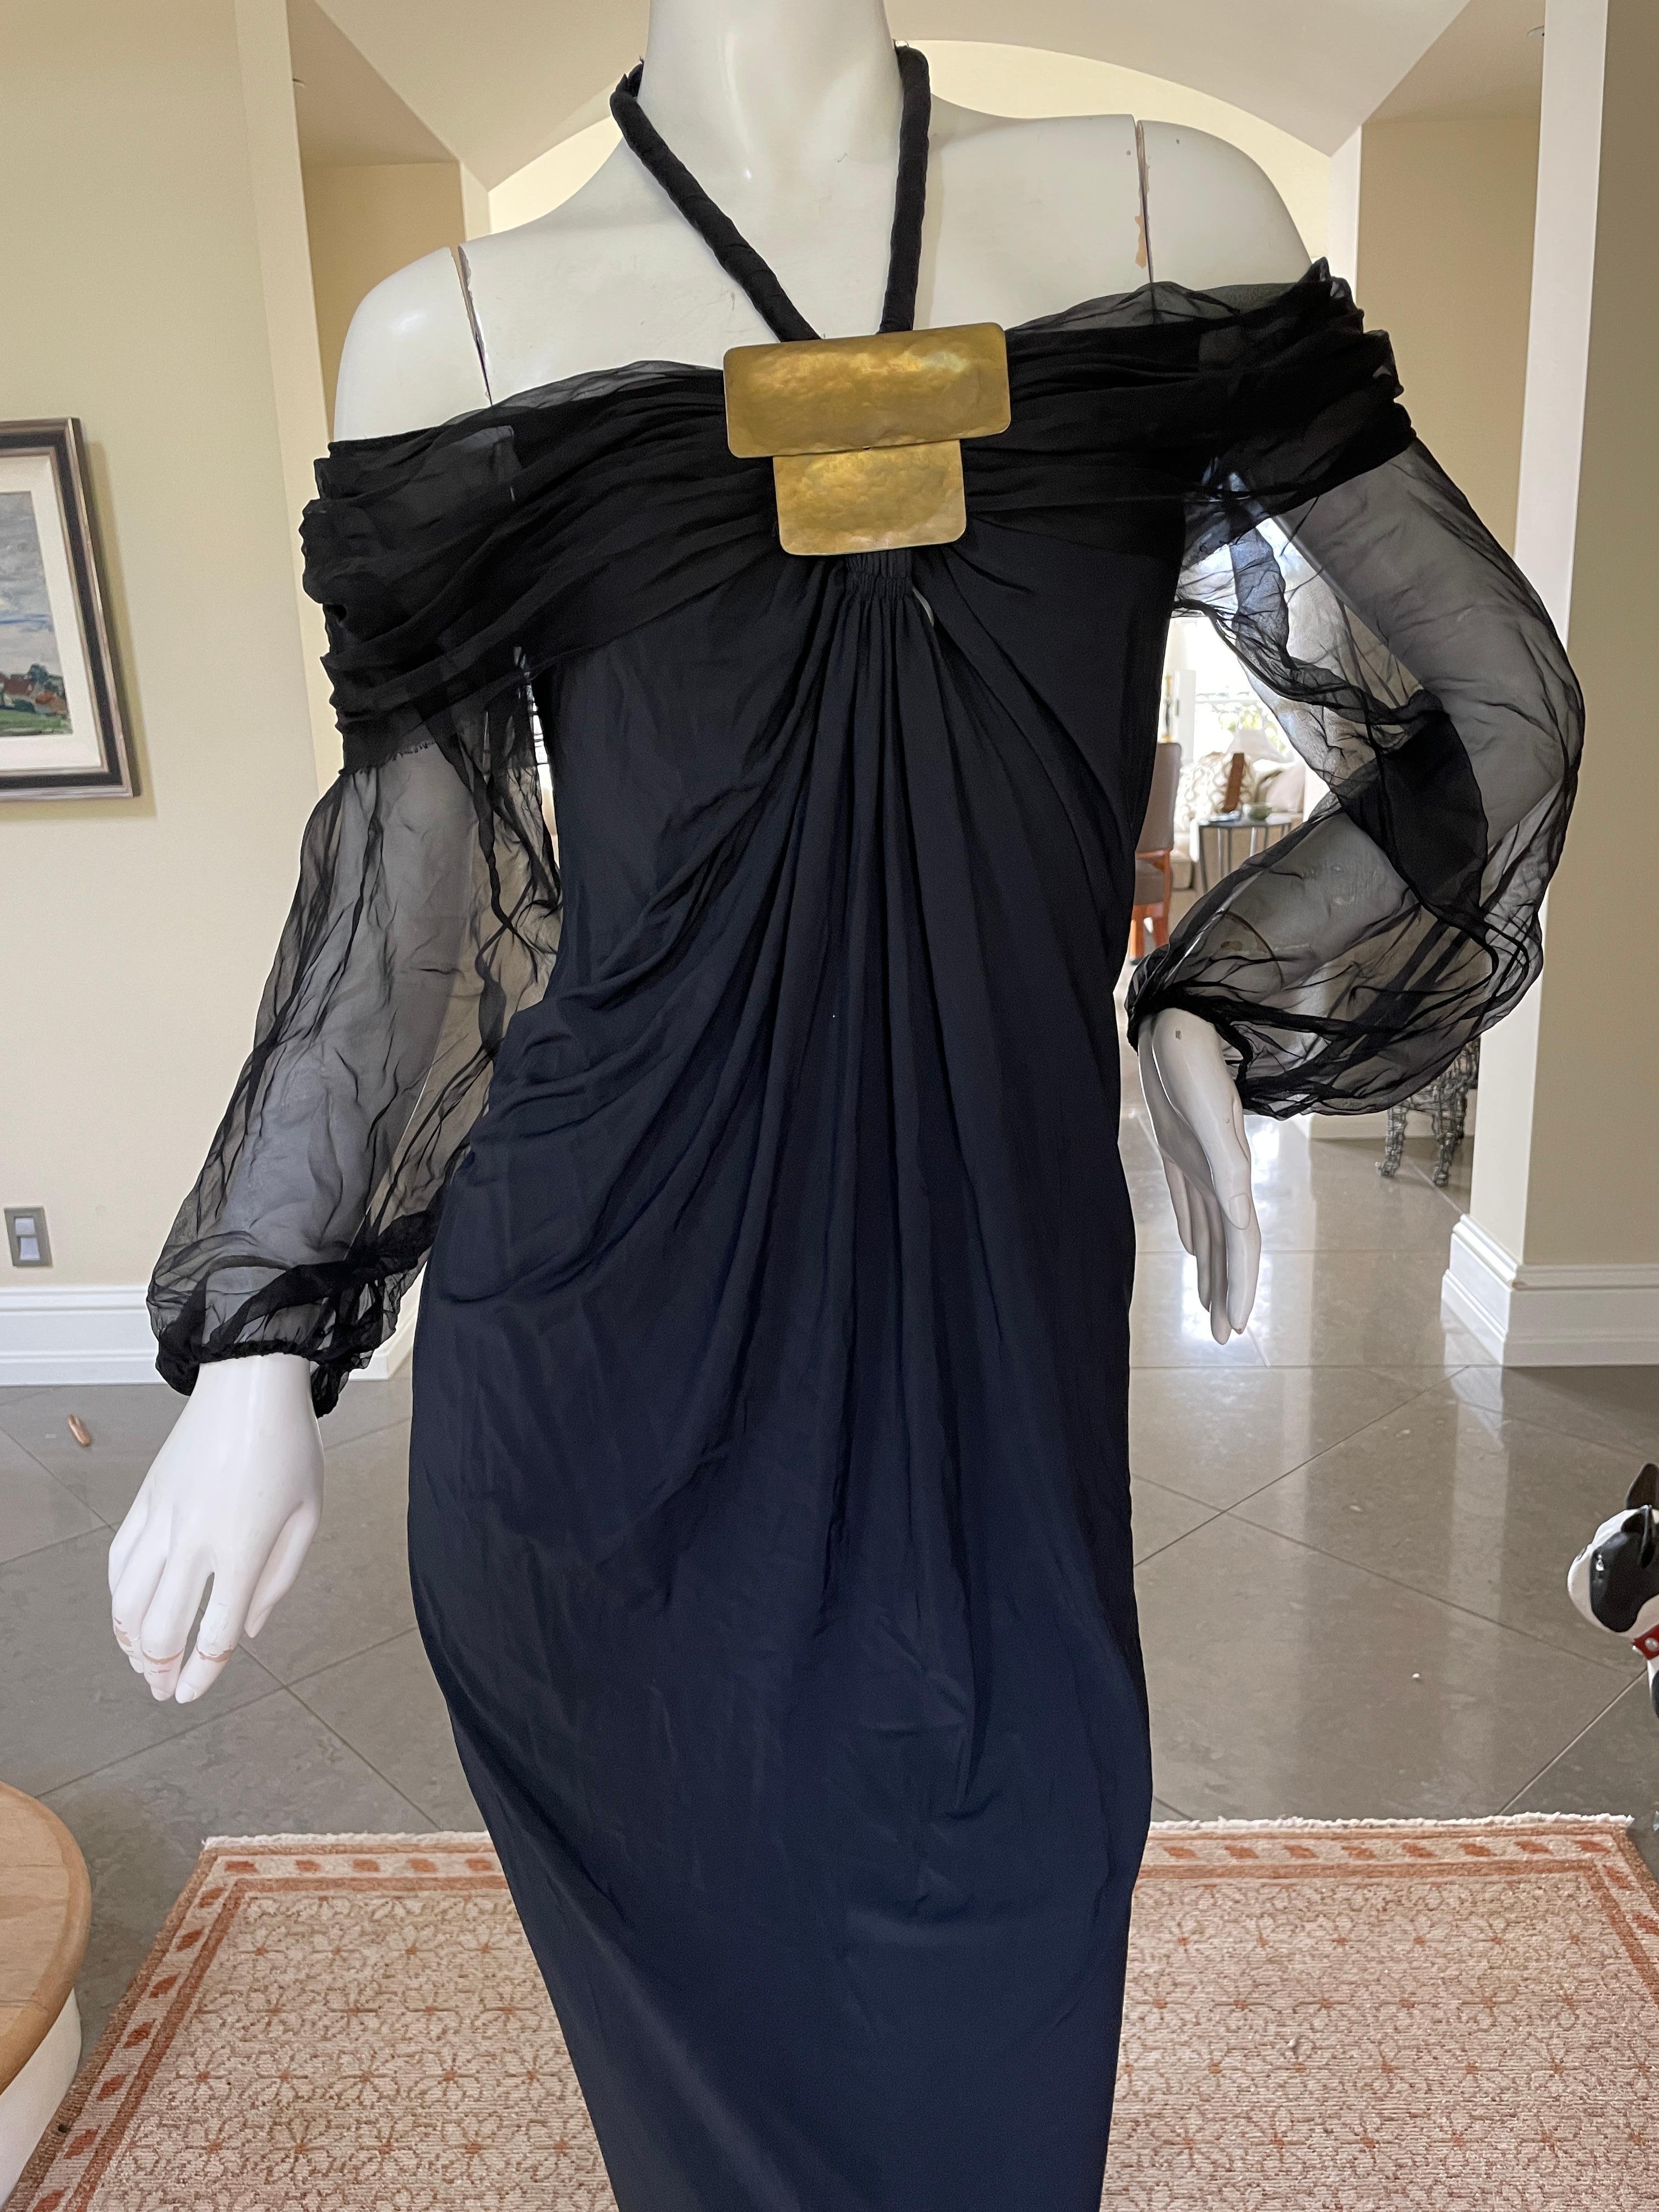 Donna Karan Vintage Off the Shoulder Evening Dress w Robert Lee Morris Ornament In Excellent Condition For Sale In Cloverdale, CA